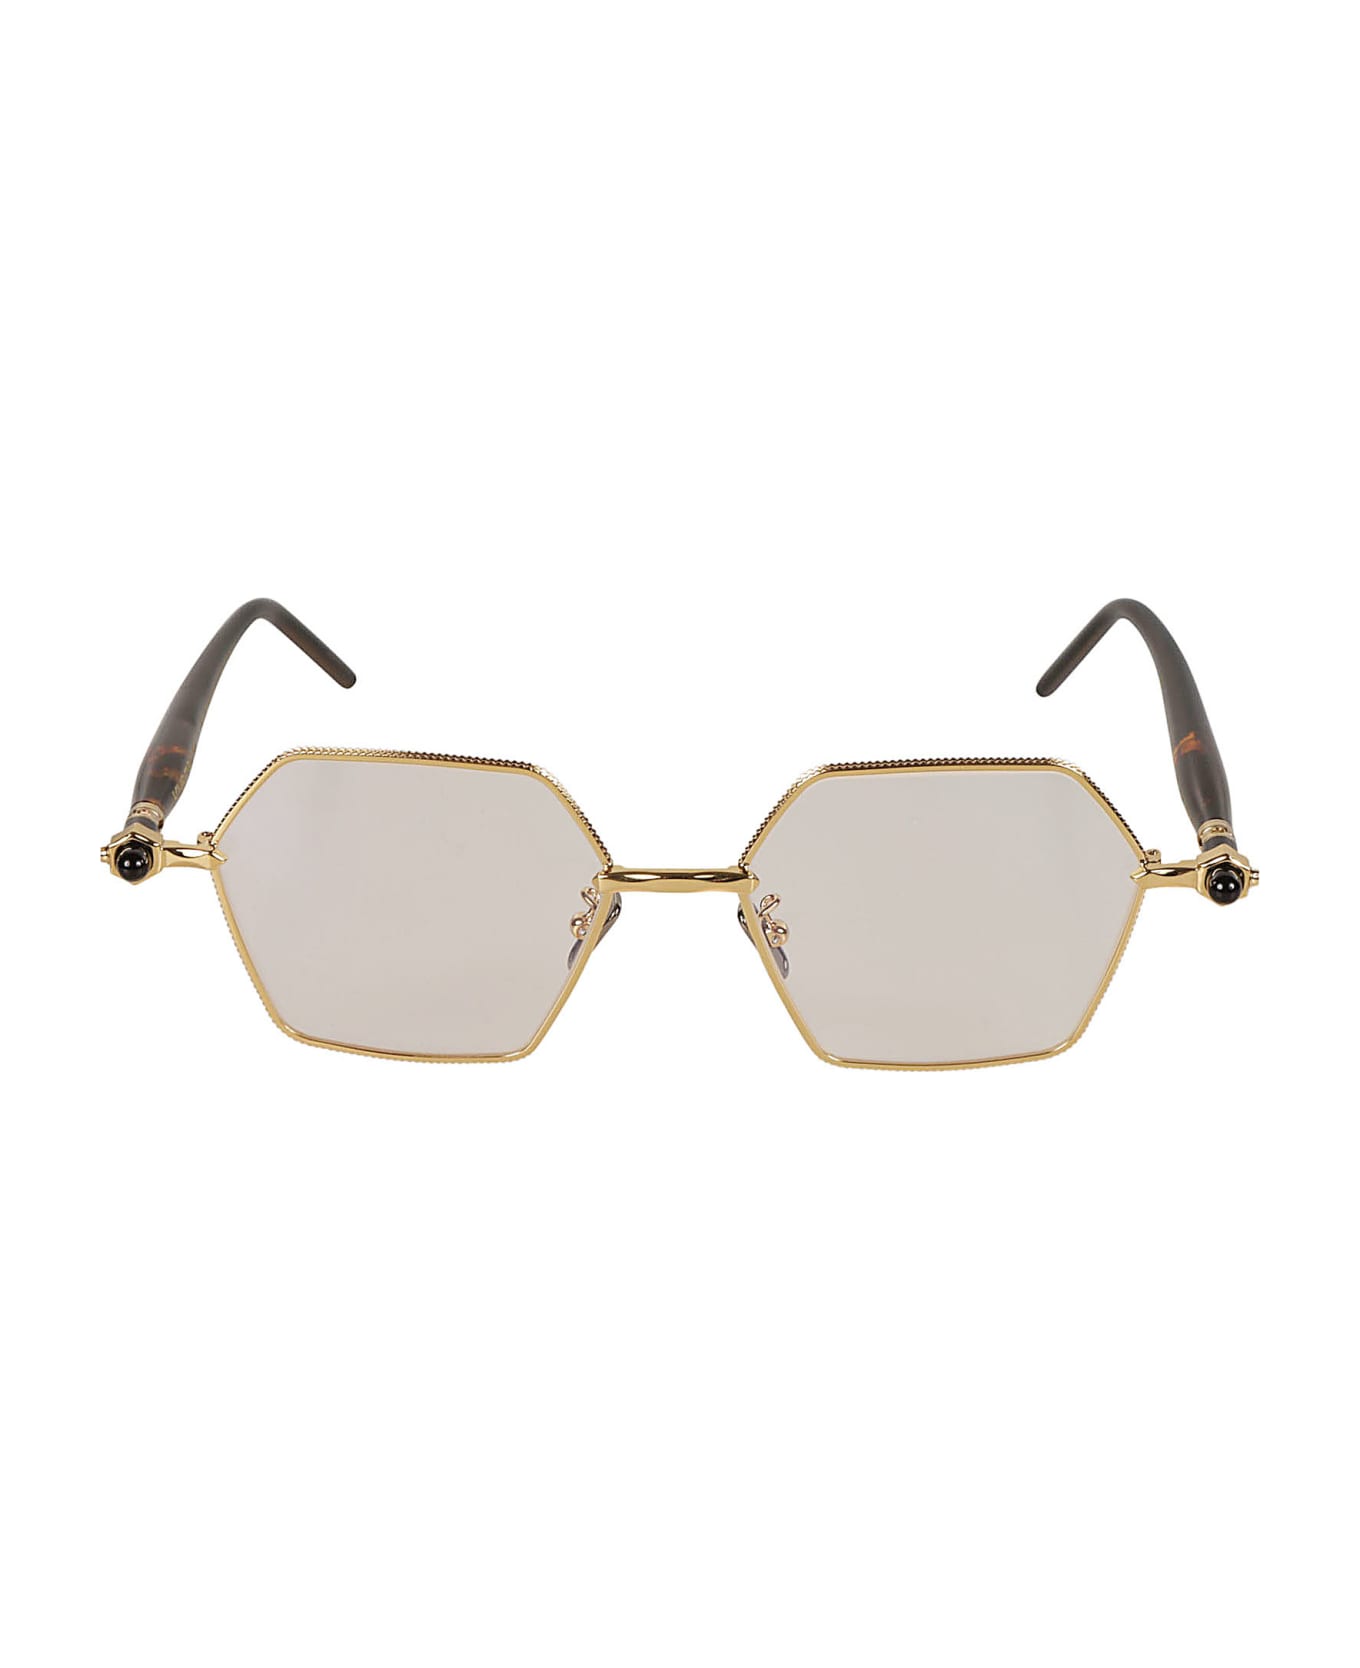 Kuboraum P70 Glasses Glasses - gold アイウェア